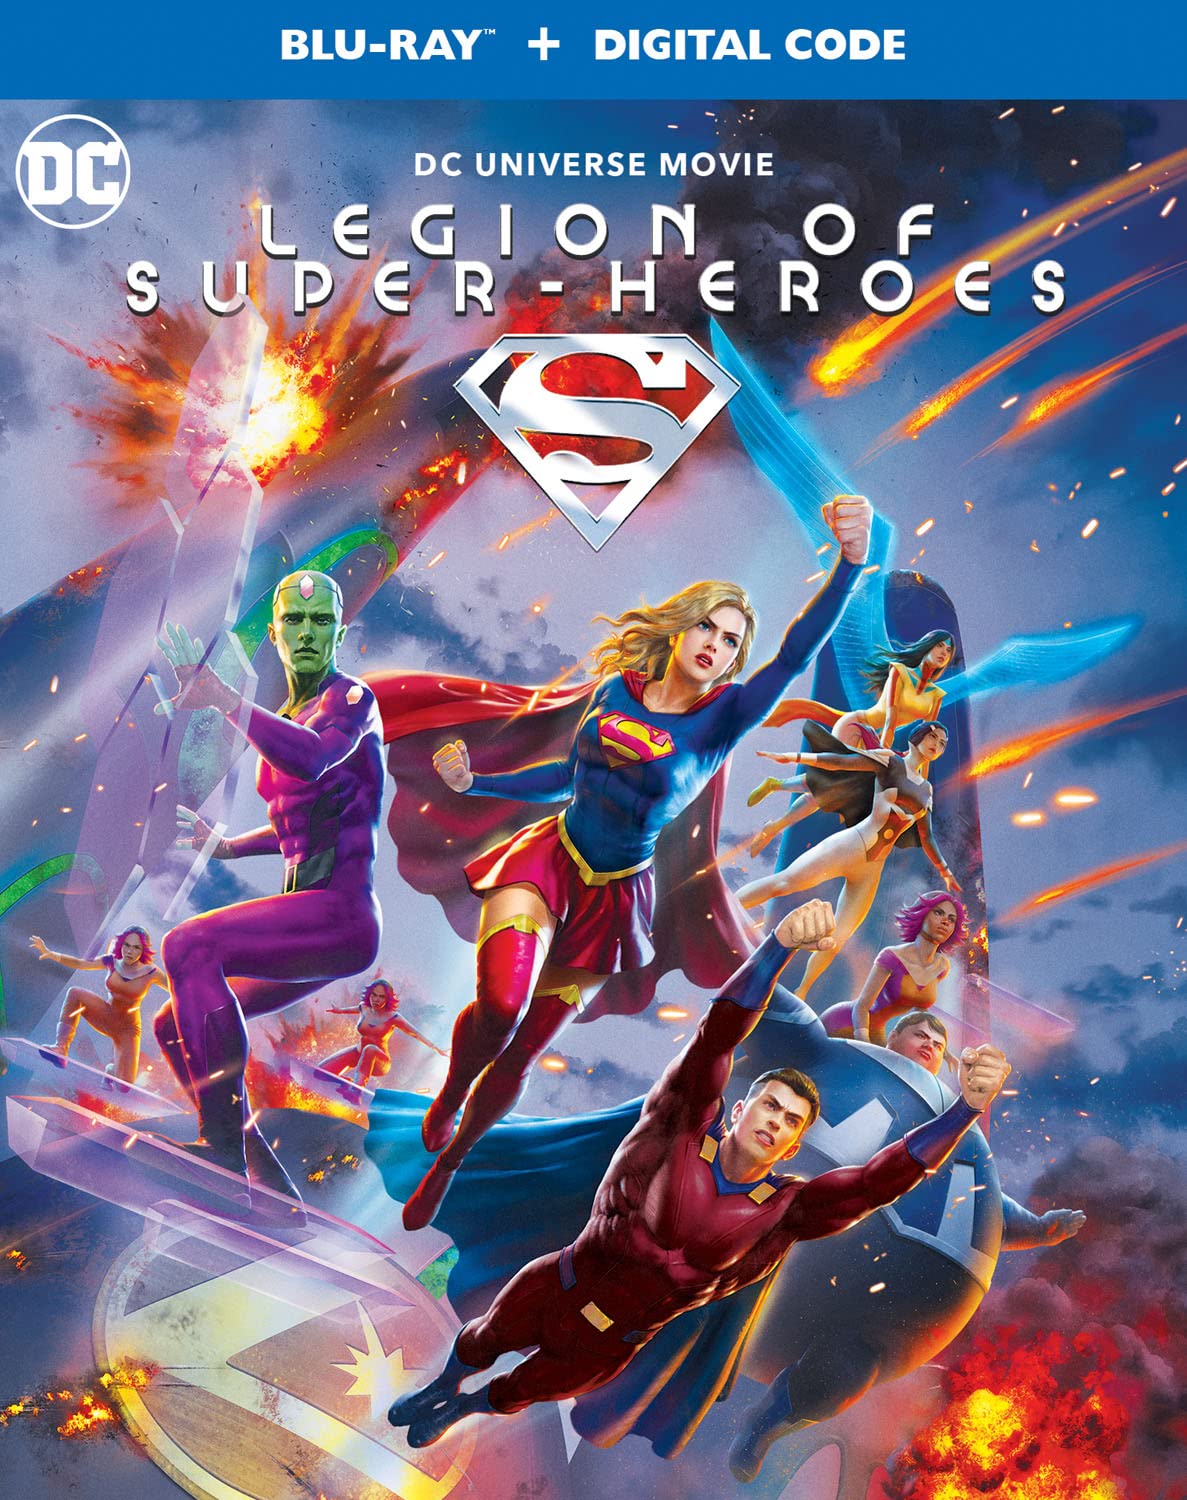 Legion of Super-Heroes DC Animated Movie - Amazon